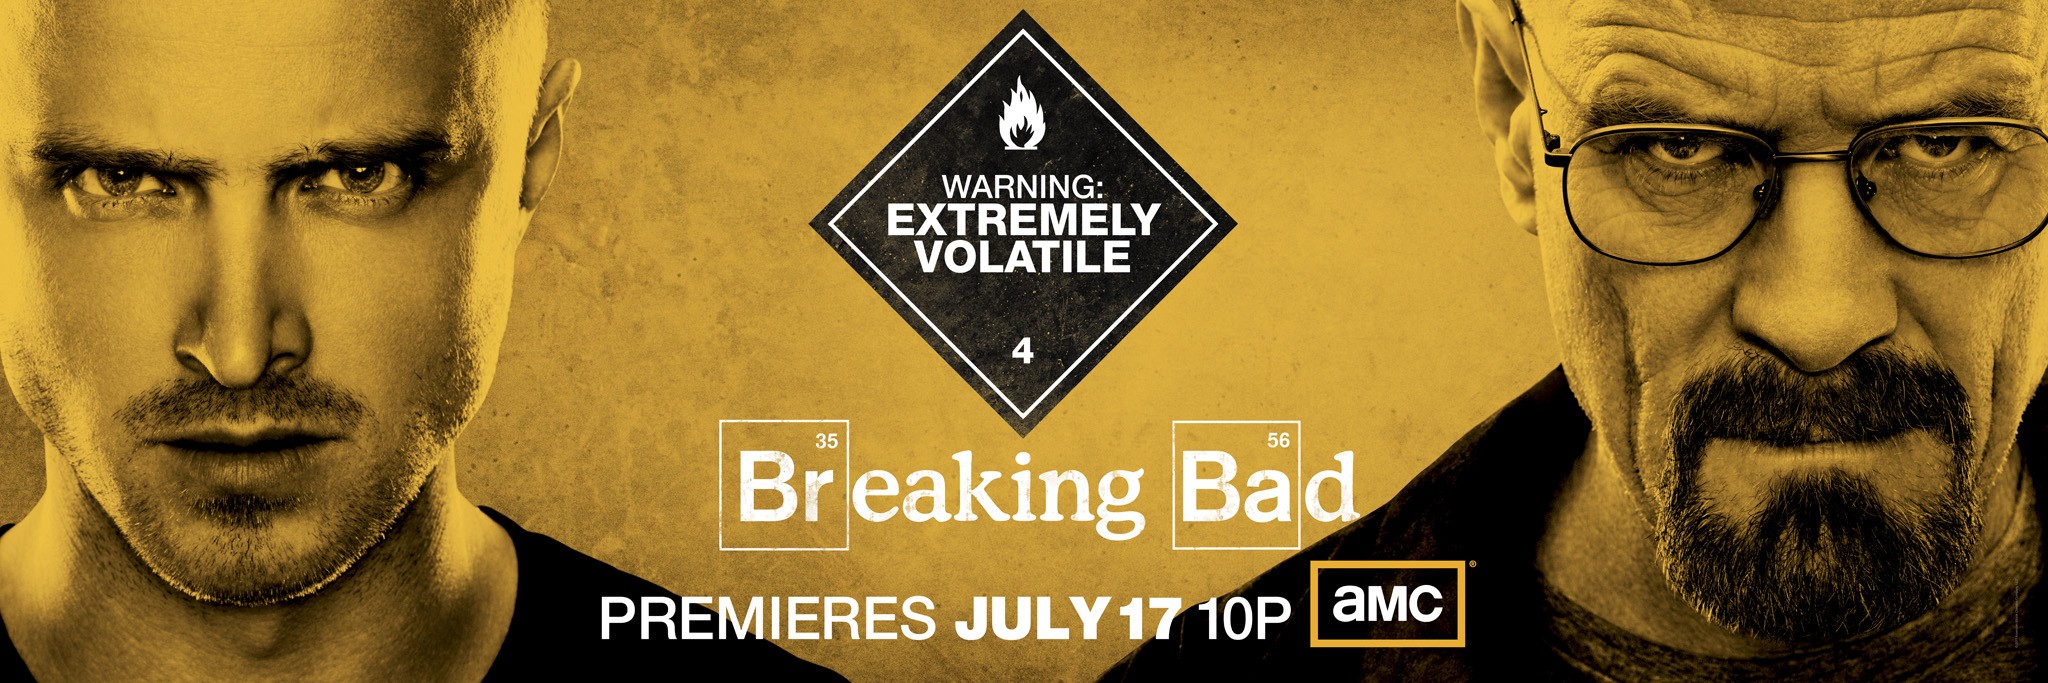 Mega Sized TV Poster Image for Breaking Bad (#6 of 14)